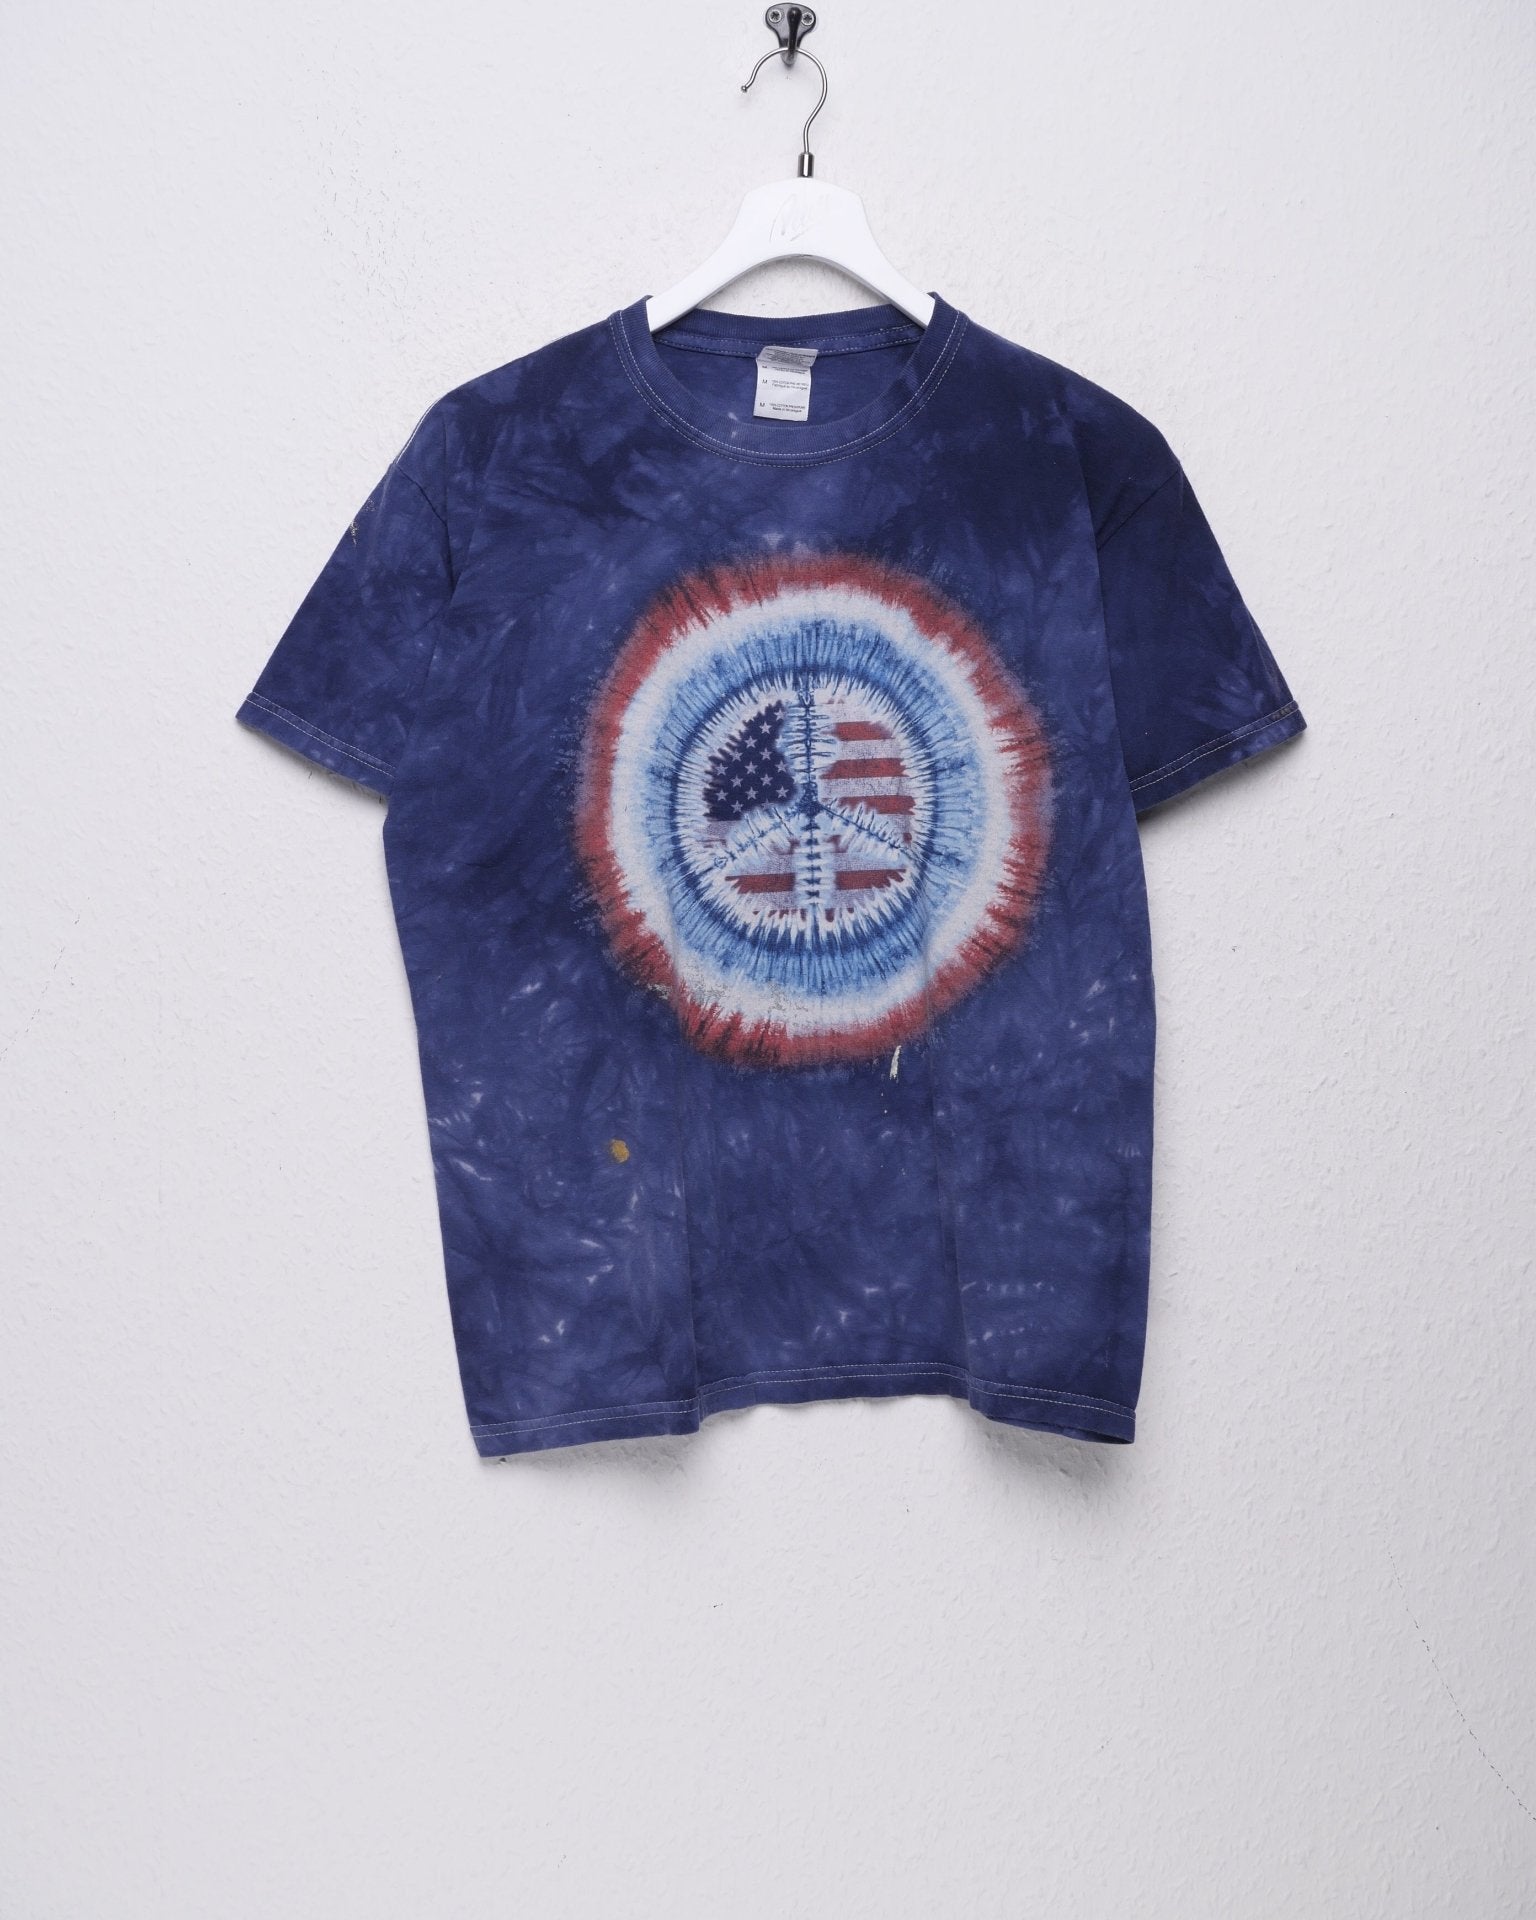 Peace America printed Tie Dye Shirt - Peeces